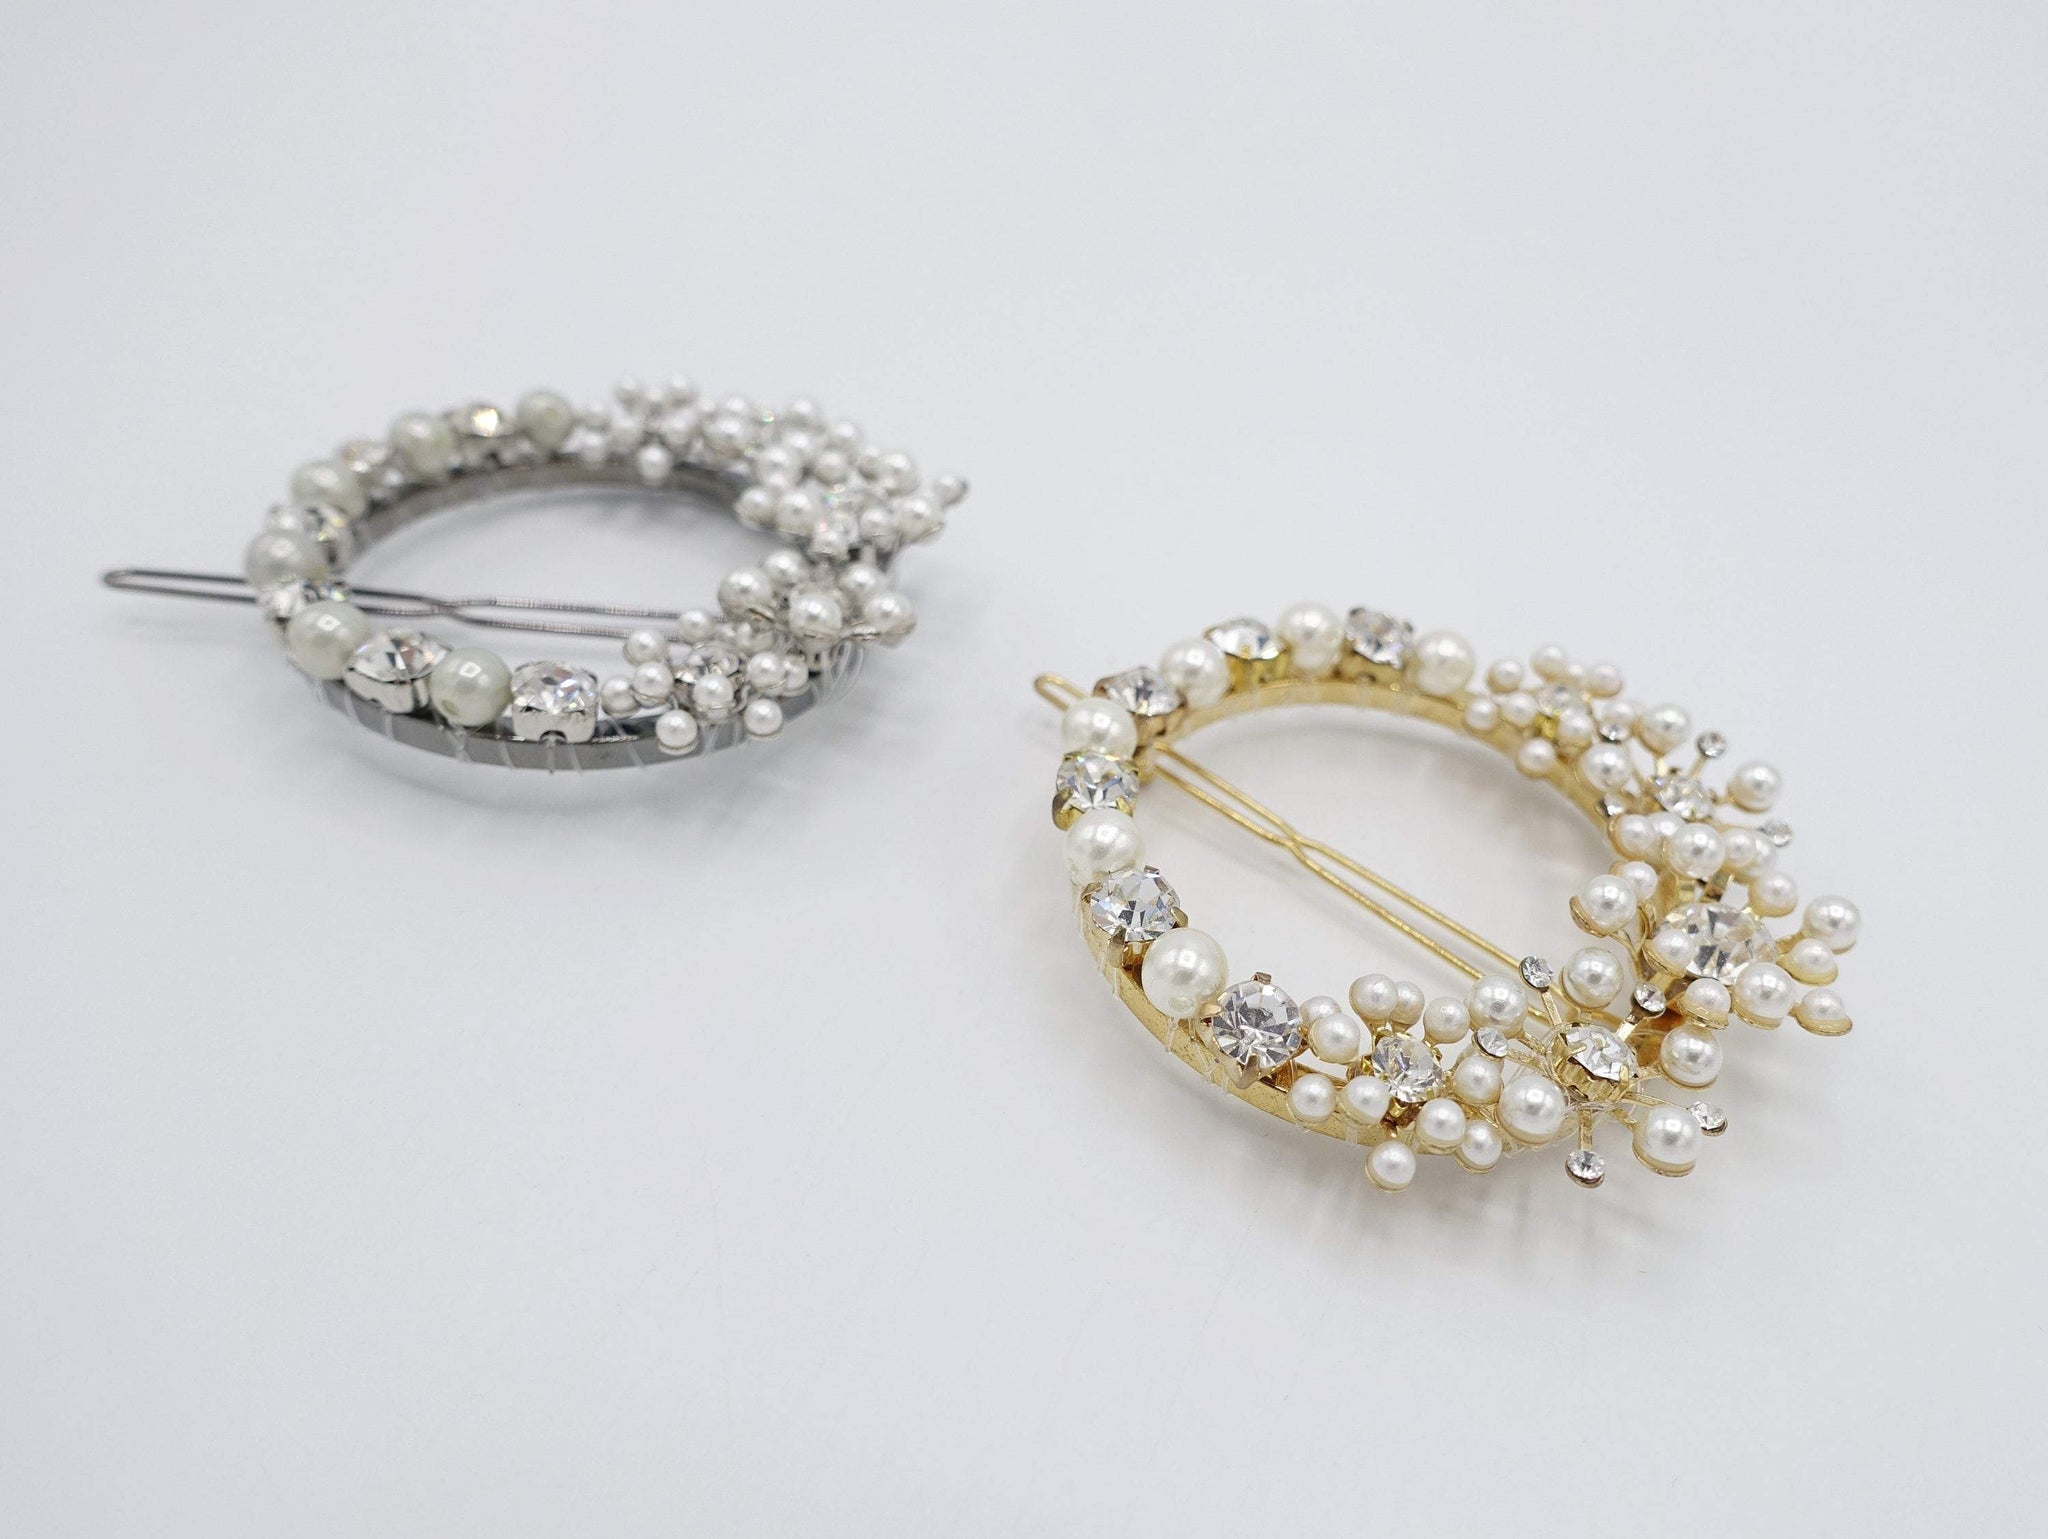 VeryShine claw/banana/barrette bridal pearl rhinestone hair clip flower hair accessory for women